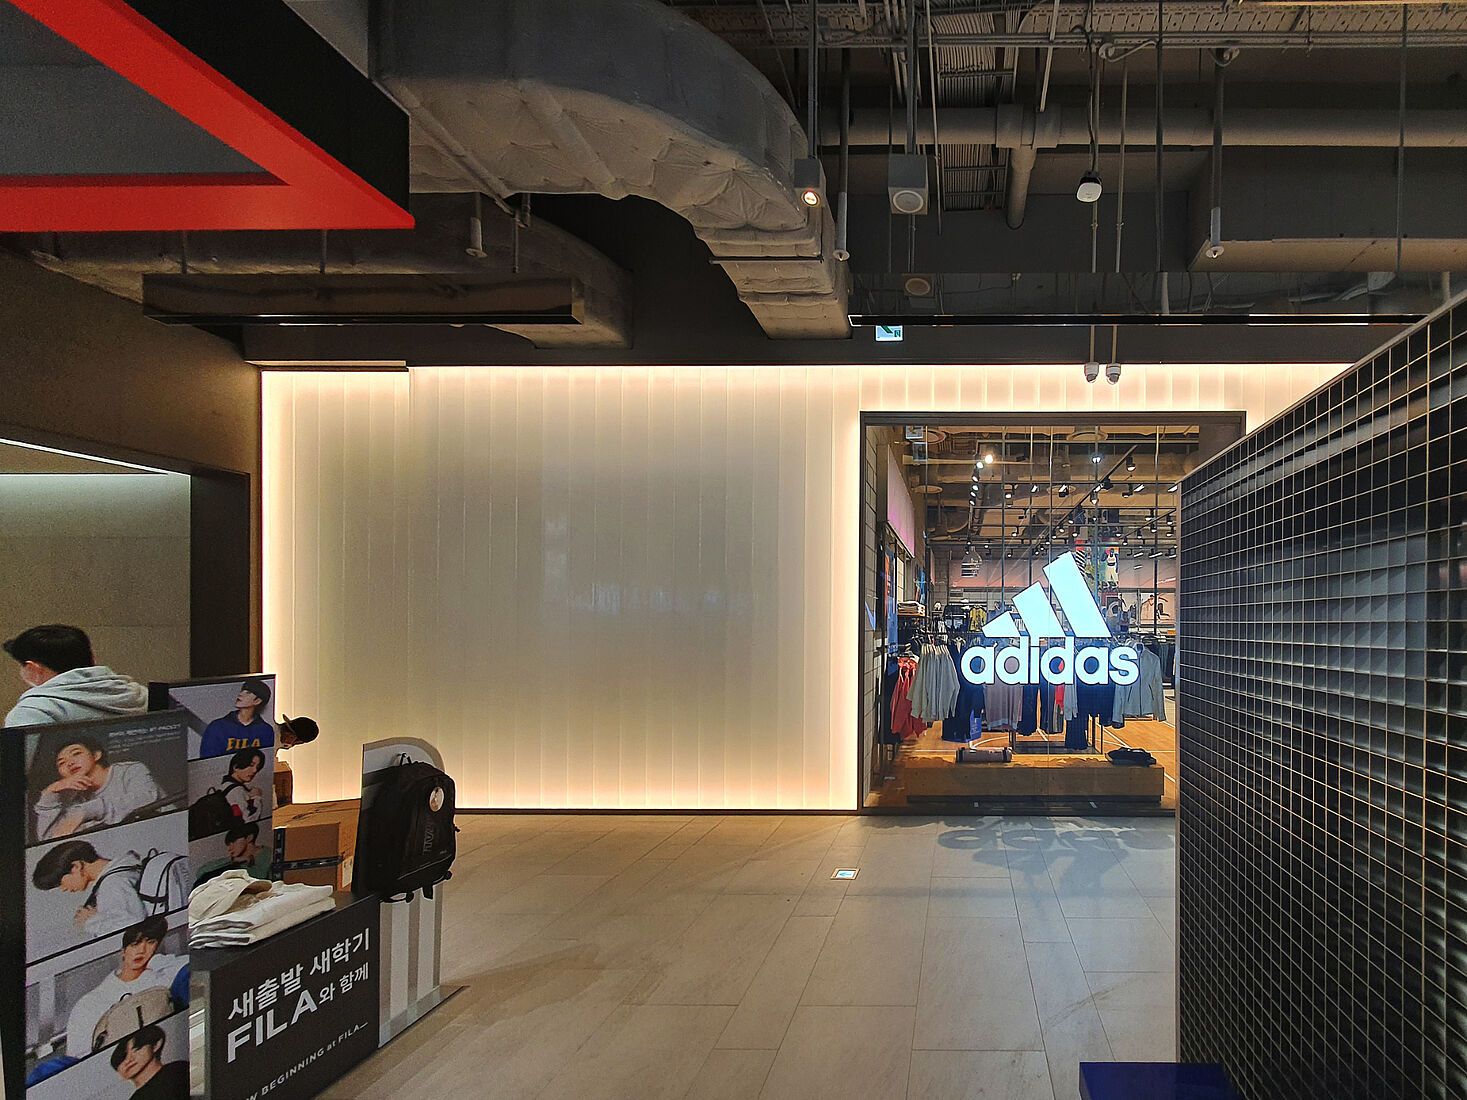 Adidas - The Hyundai Seoul